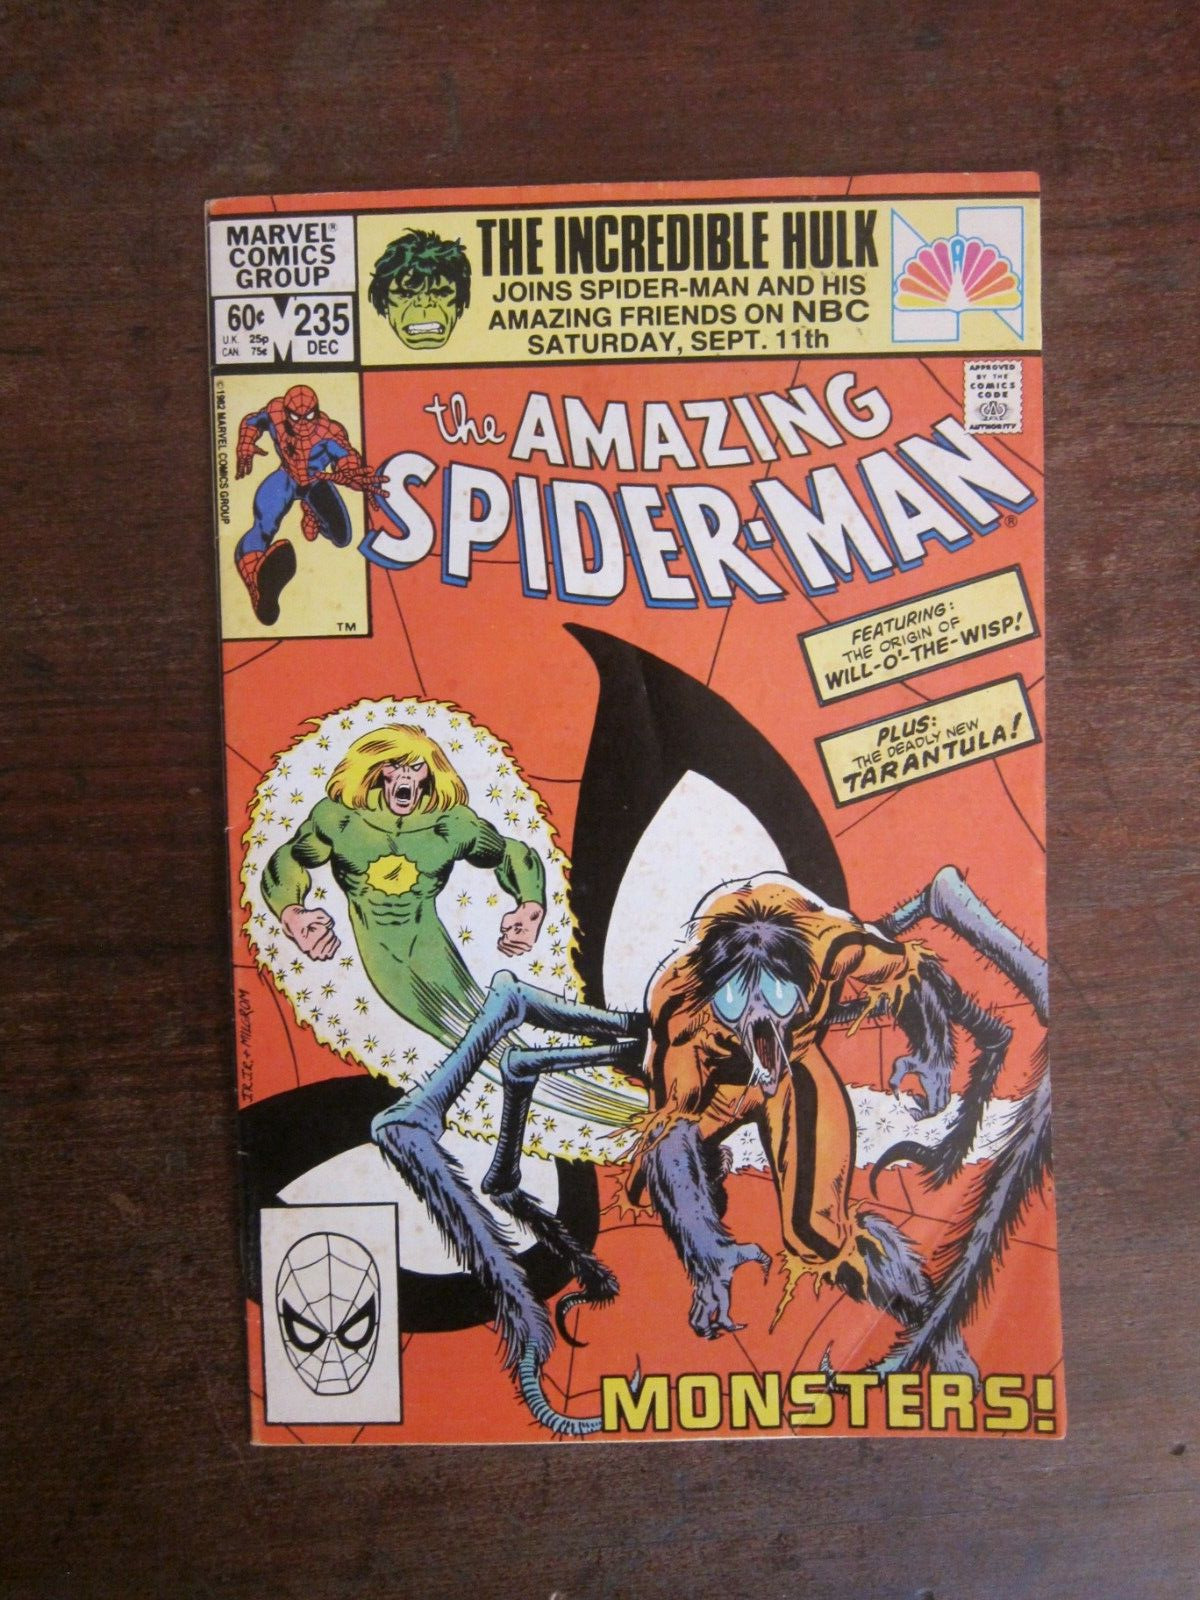 Amazing Spider-Man #235 - Tarantula, Will-O\'-the-Wisp - John Romita, Jr. art